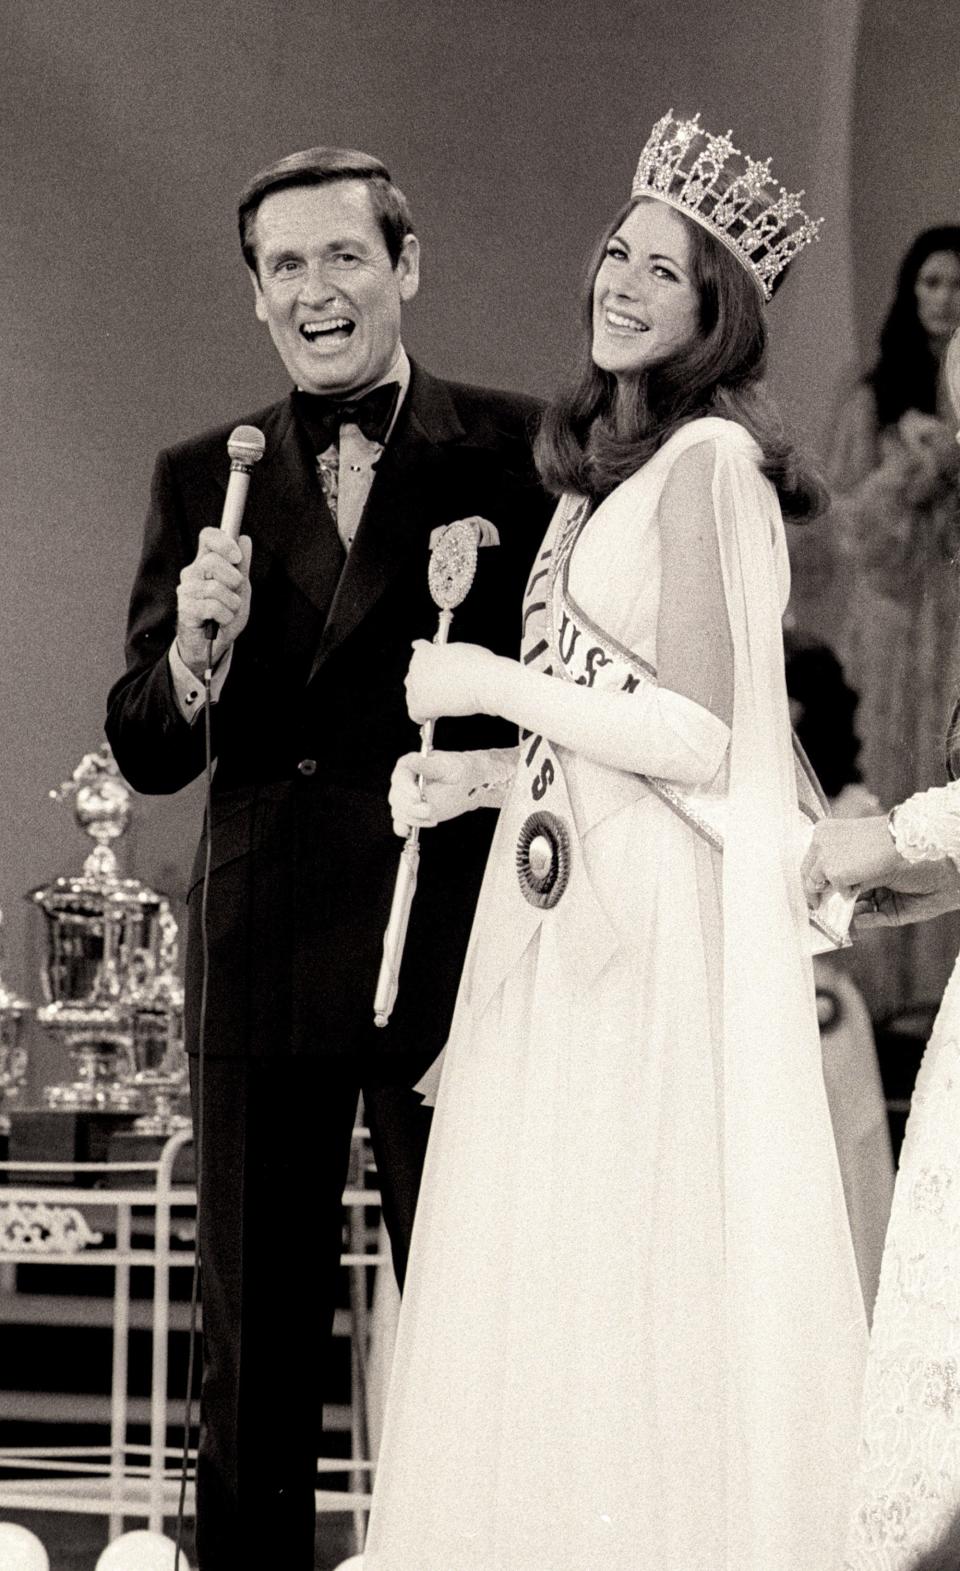 Miss USA Amanda Jones is crowned in 1973.